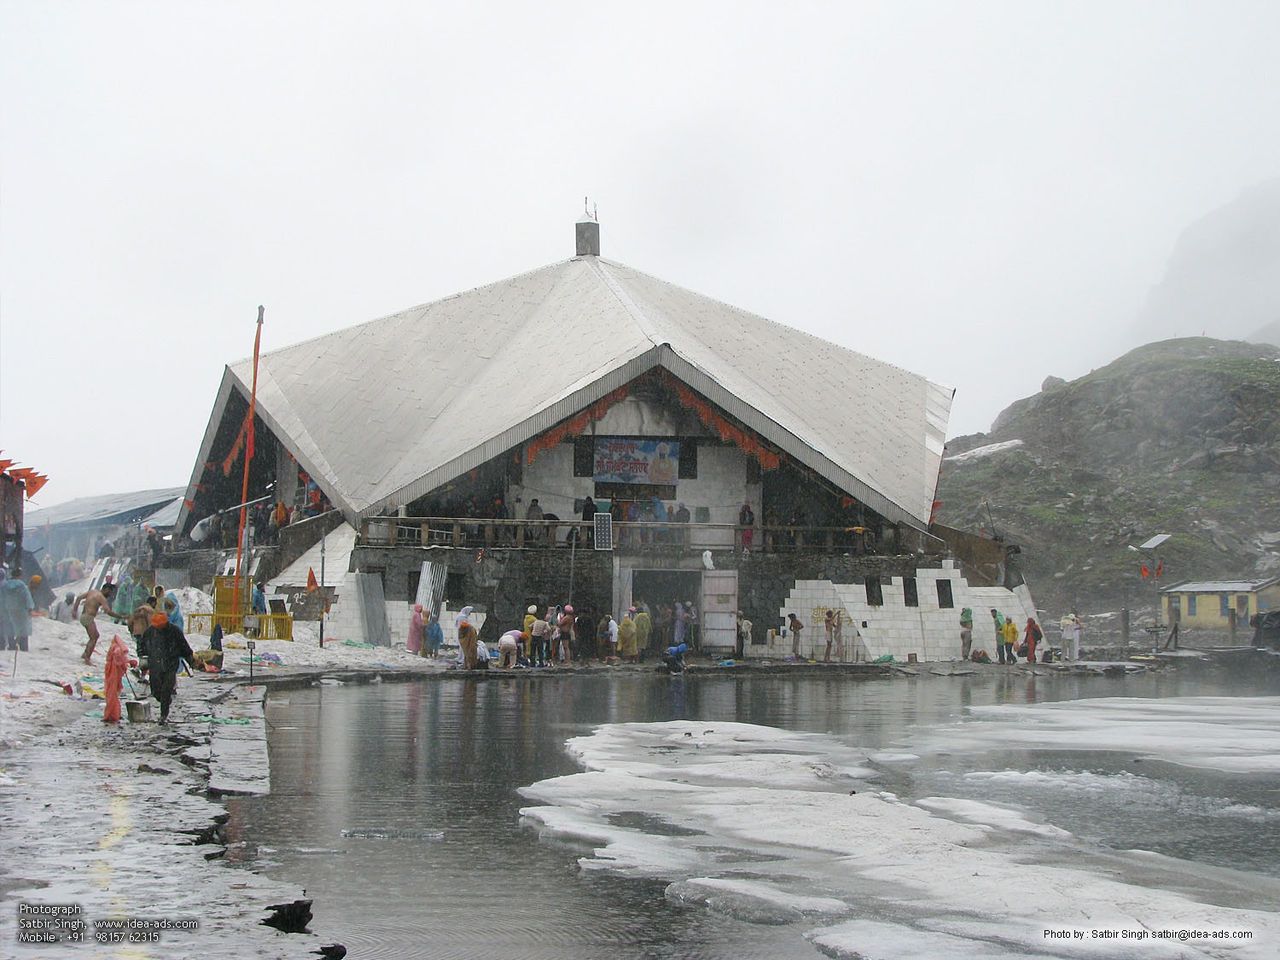 Another view of the Gurudwara